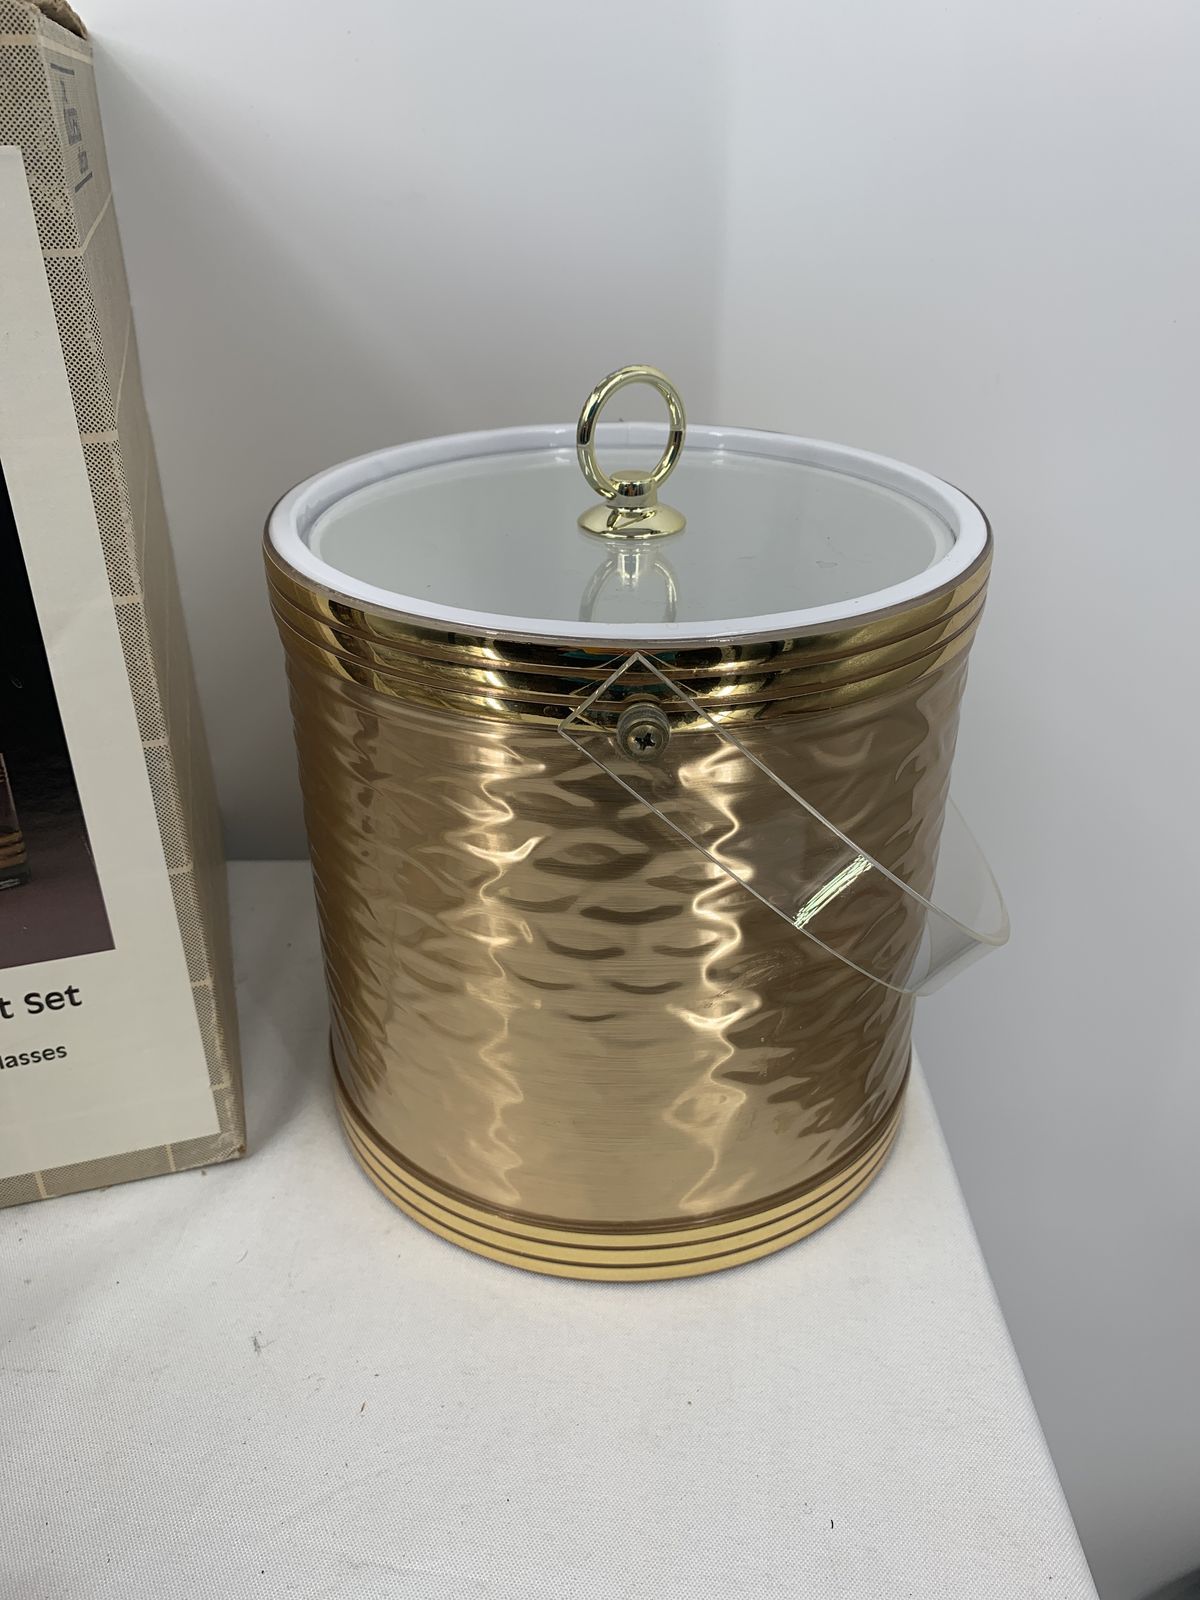 Dusseau Gold Tuxedo 6 Pc. Entertainment Set Ice Bucket 4 Glasses & Shot Glass